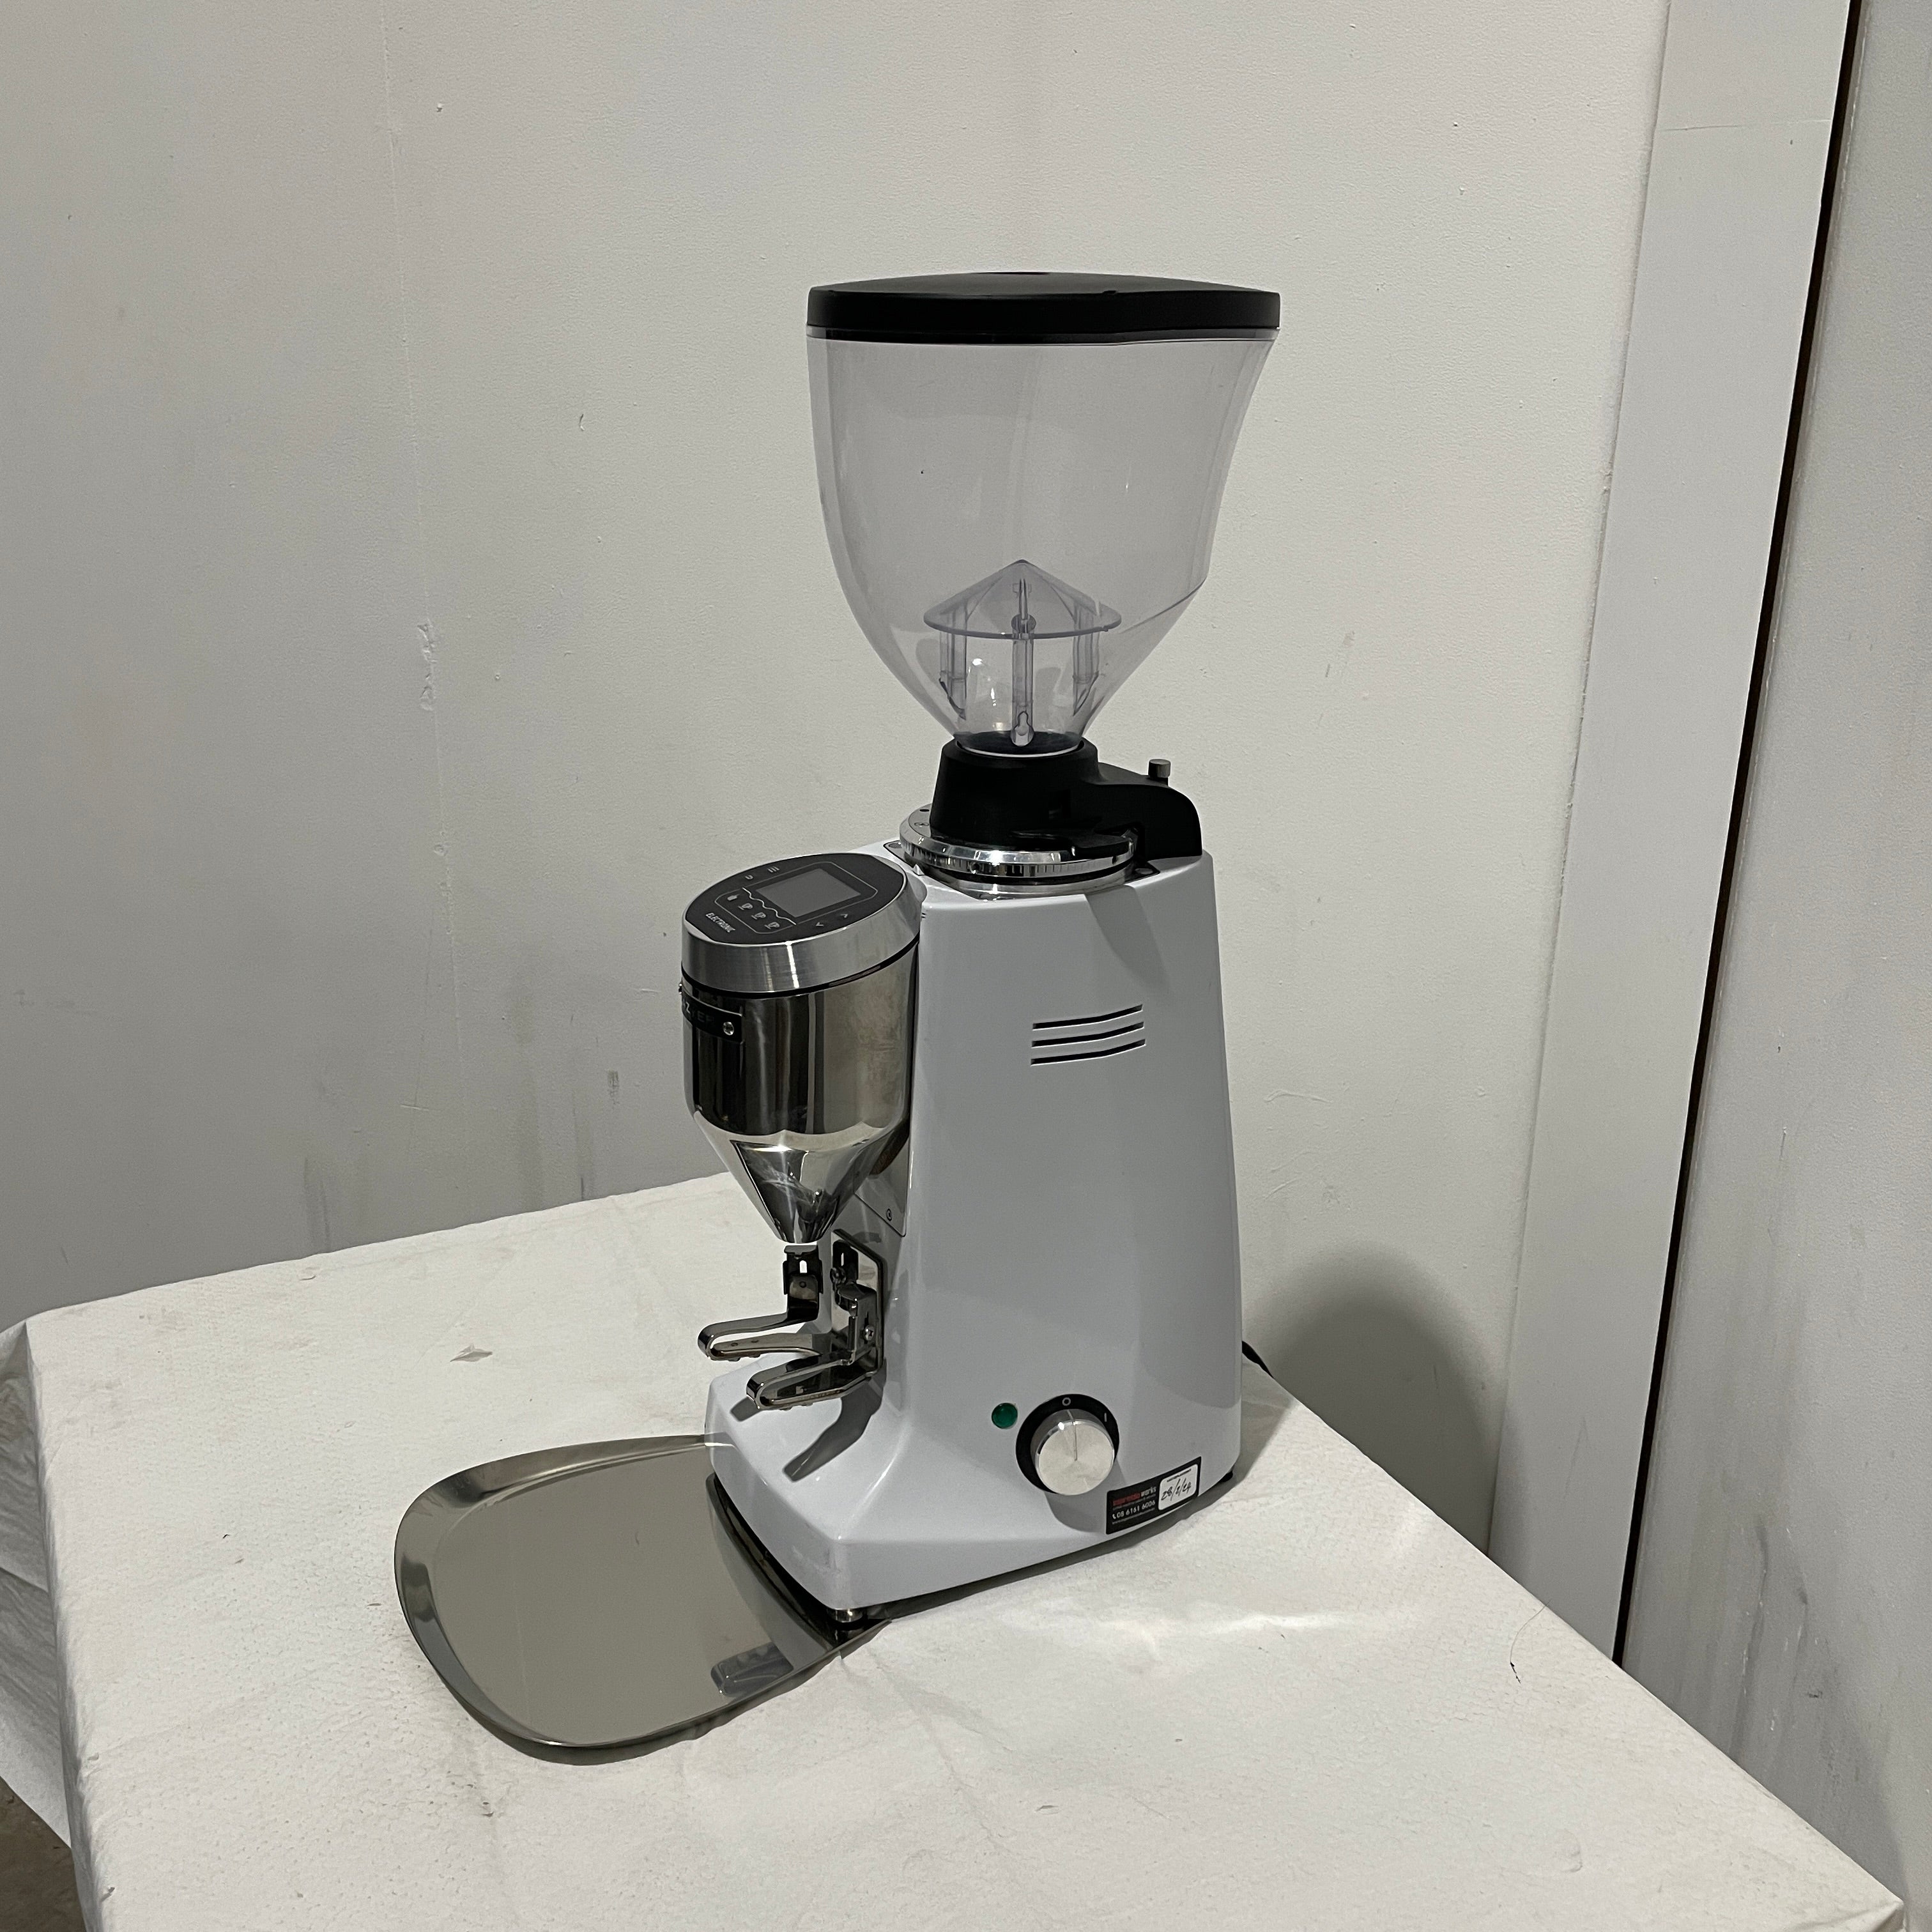 Thumbnail - Mazzer Major V Electronic Coffee Grinder